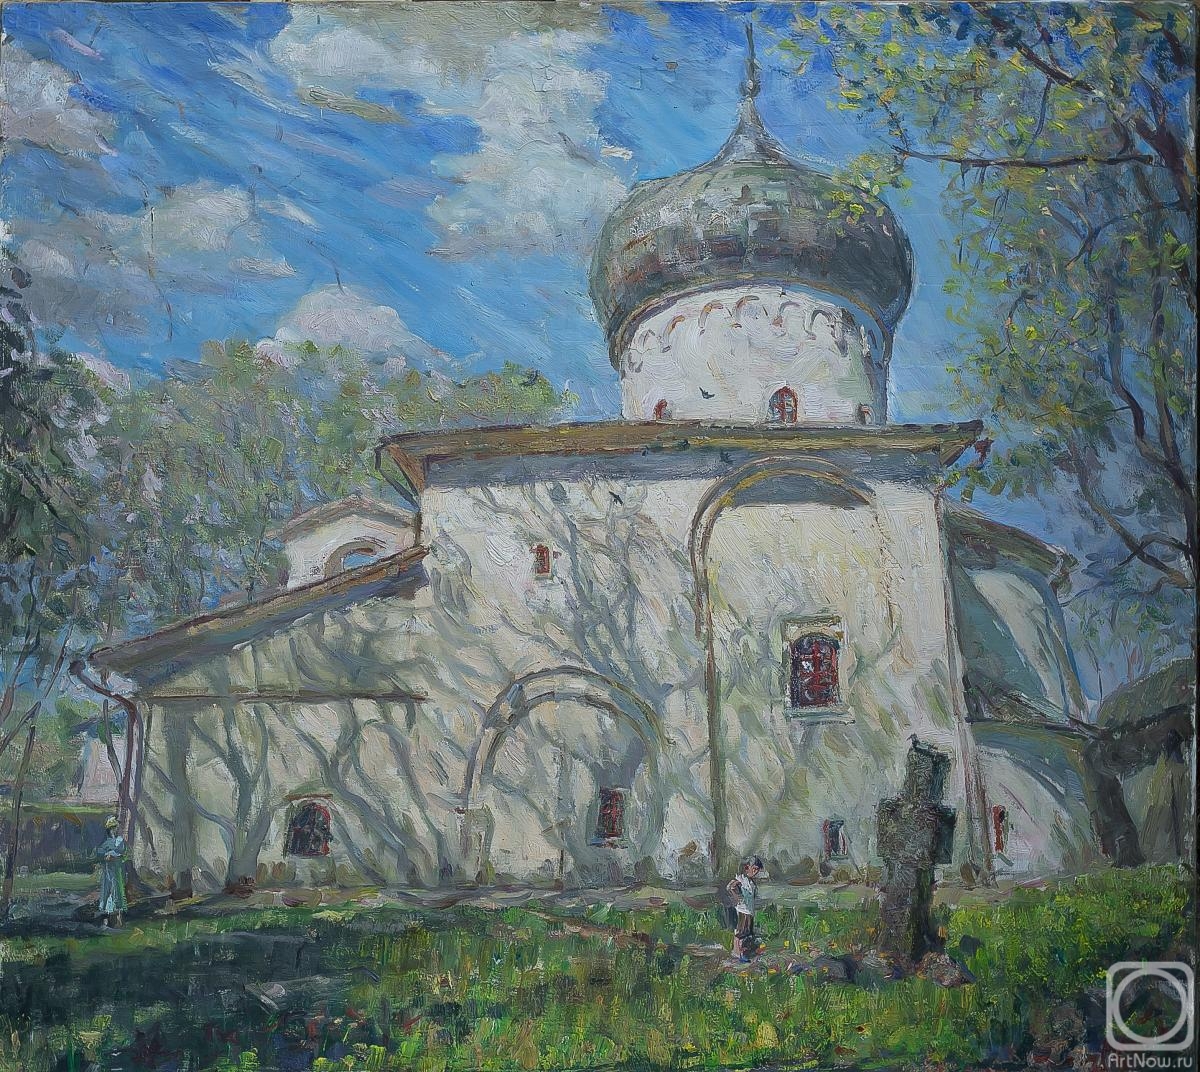 Komov Alexey. Pskov. The Memorial Easter